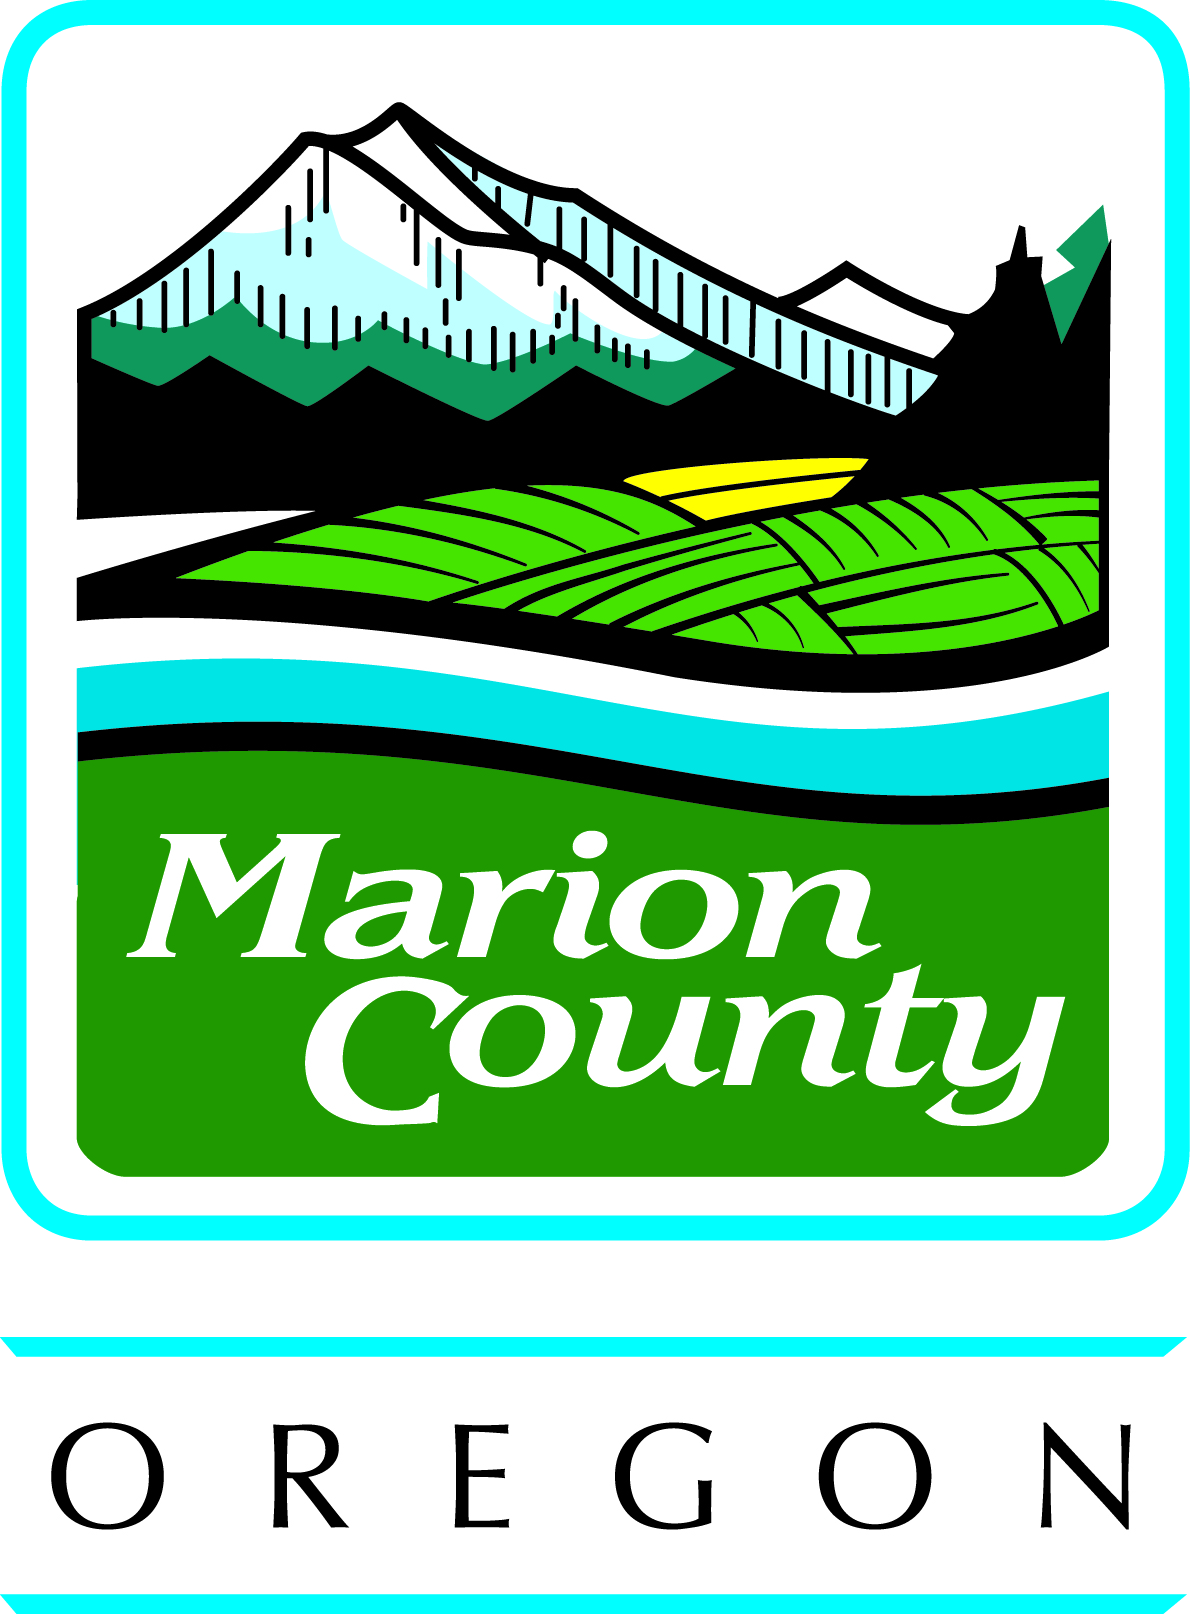 Marion County Environmental Services